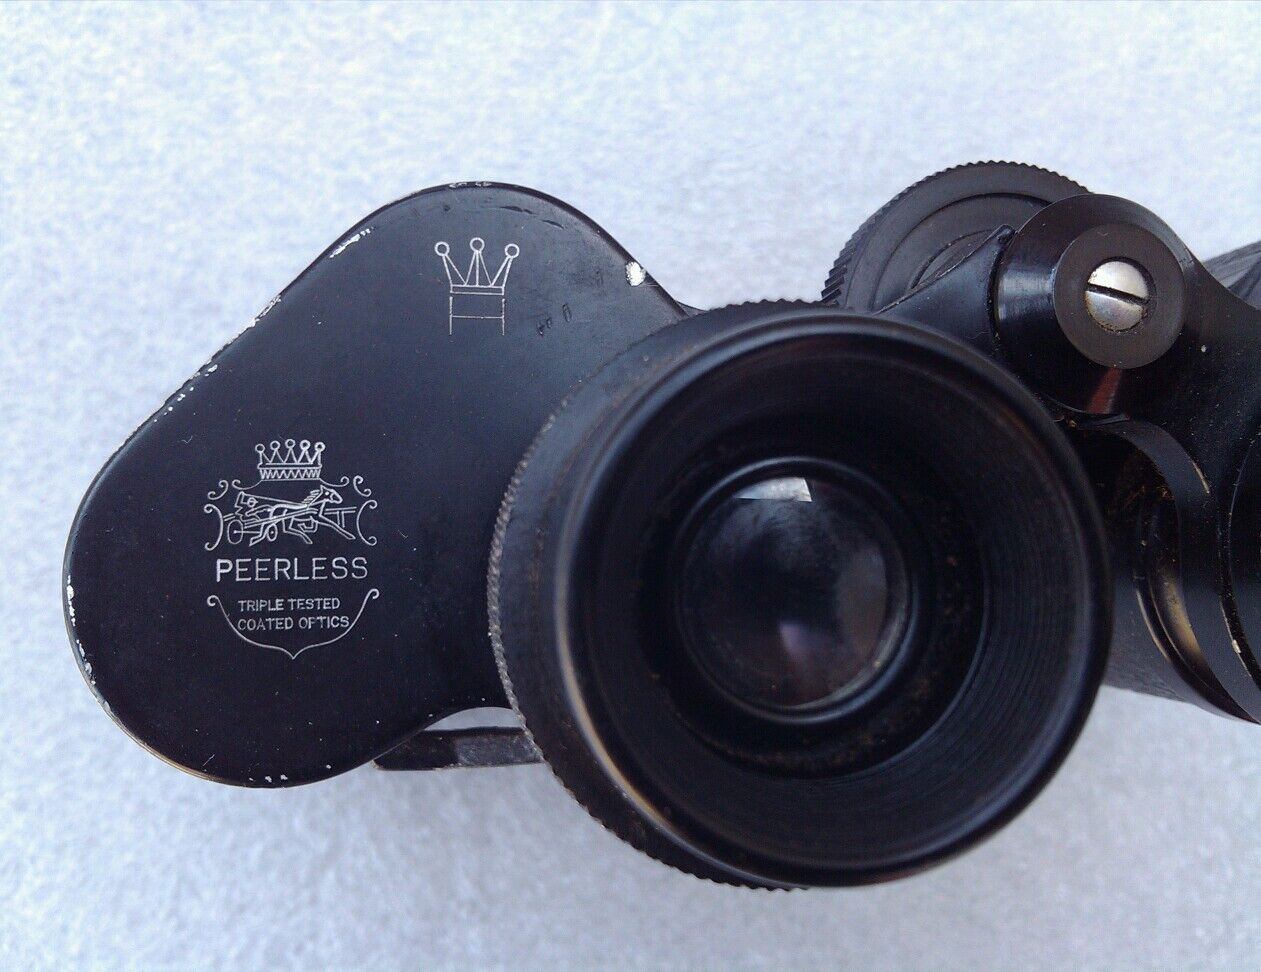 Peerless Binoculars 7 X 50 made in Japan Rare